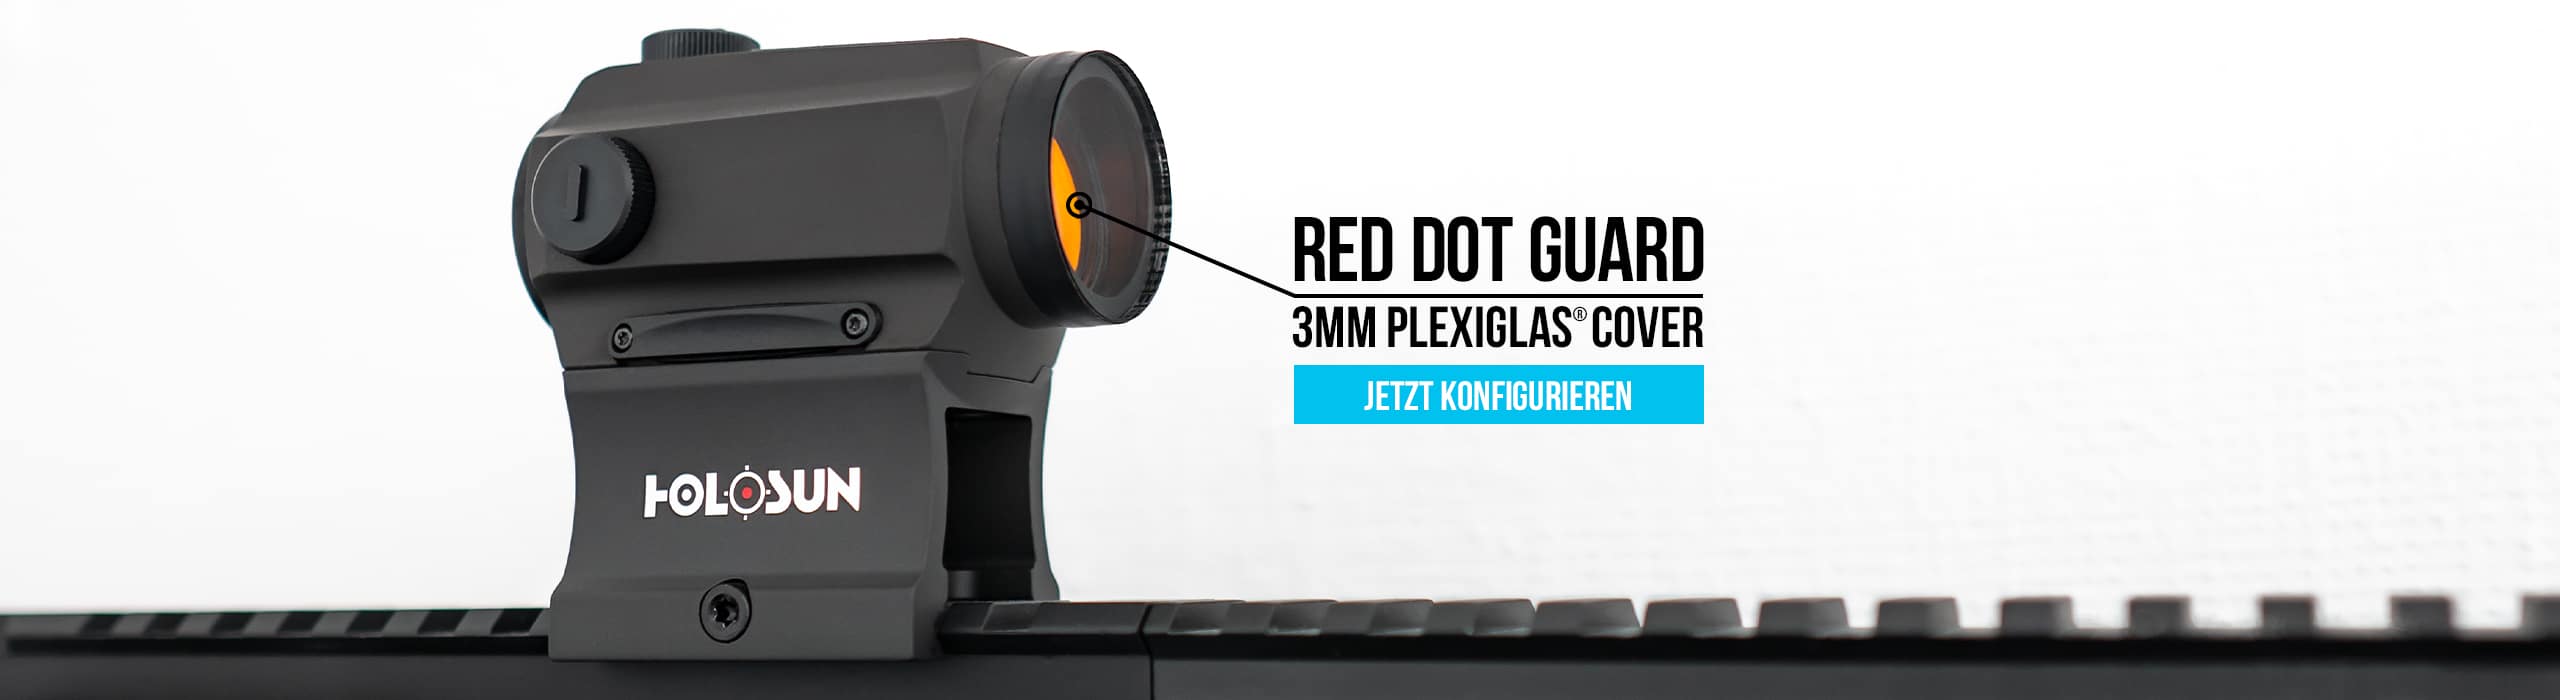 Red-Dot-Guard-Plexiglas-Slider